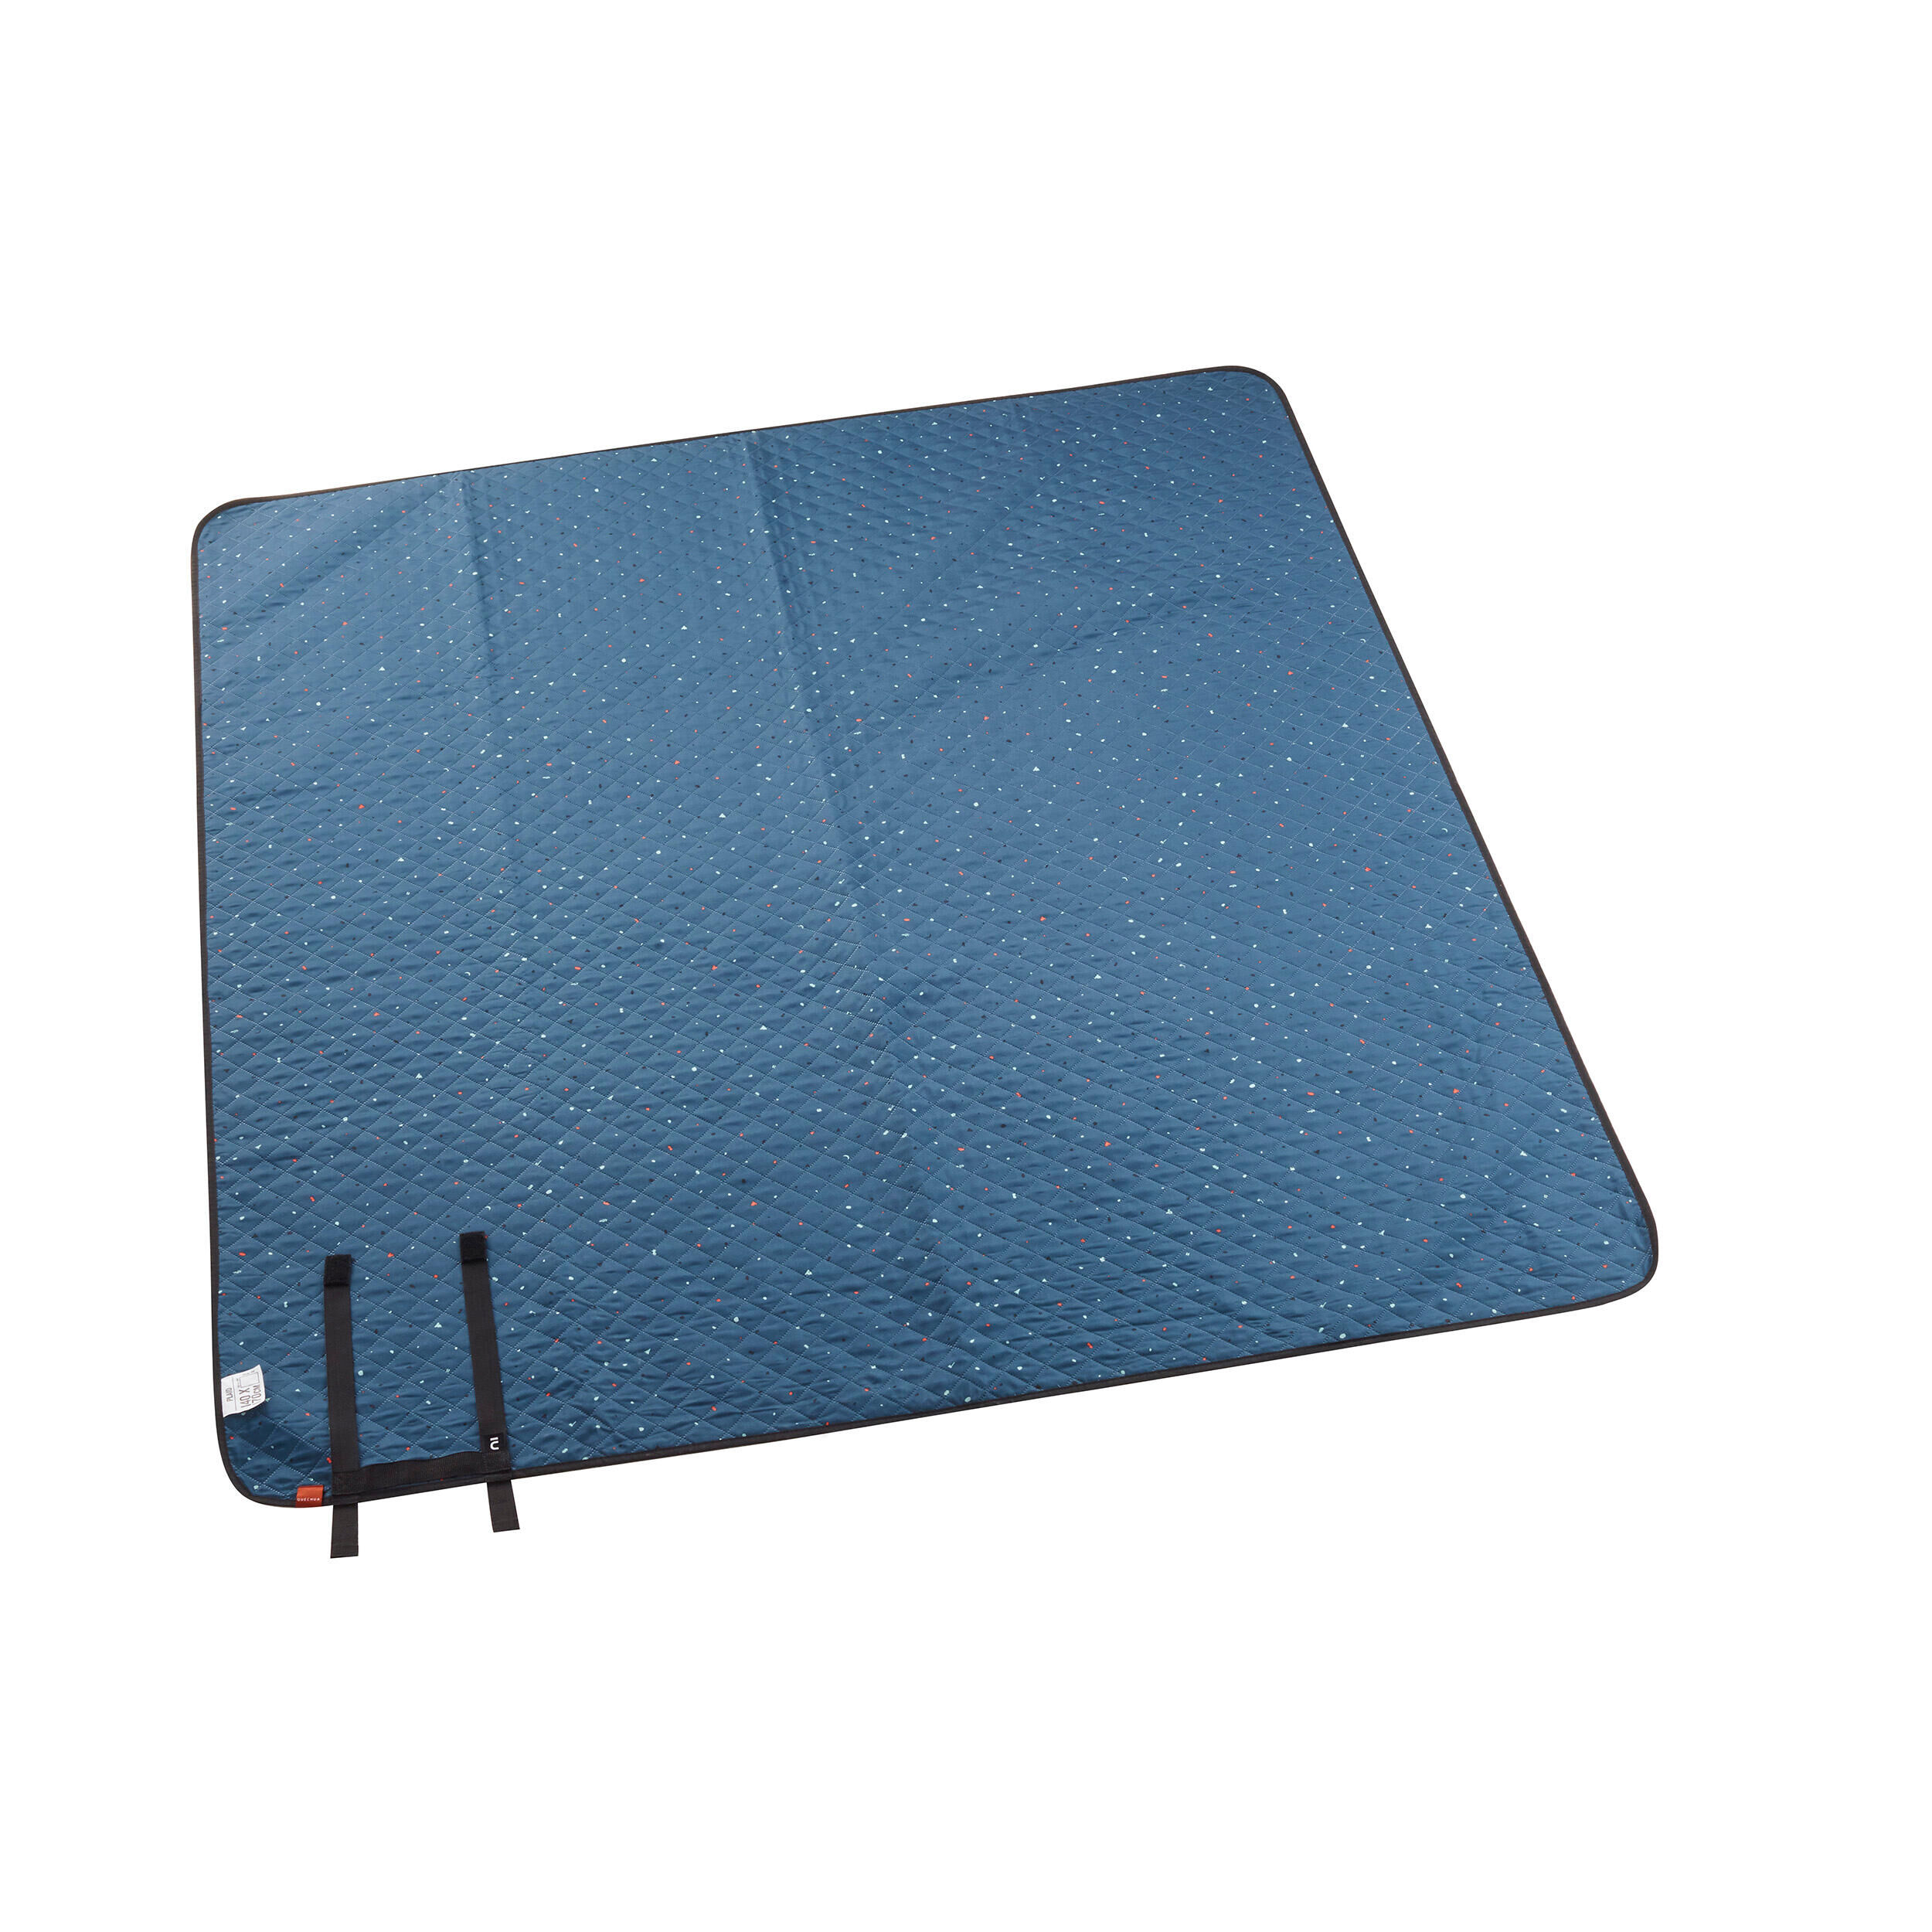 QUECHUA Comfort blanket for picnics and camping - 170 x 140 cm